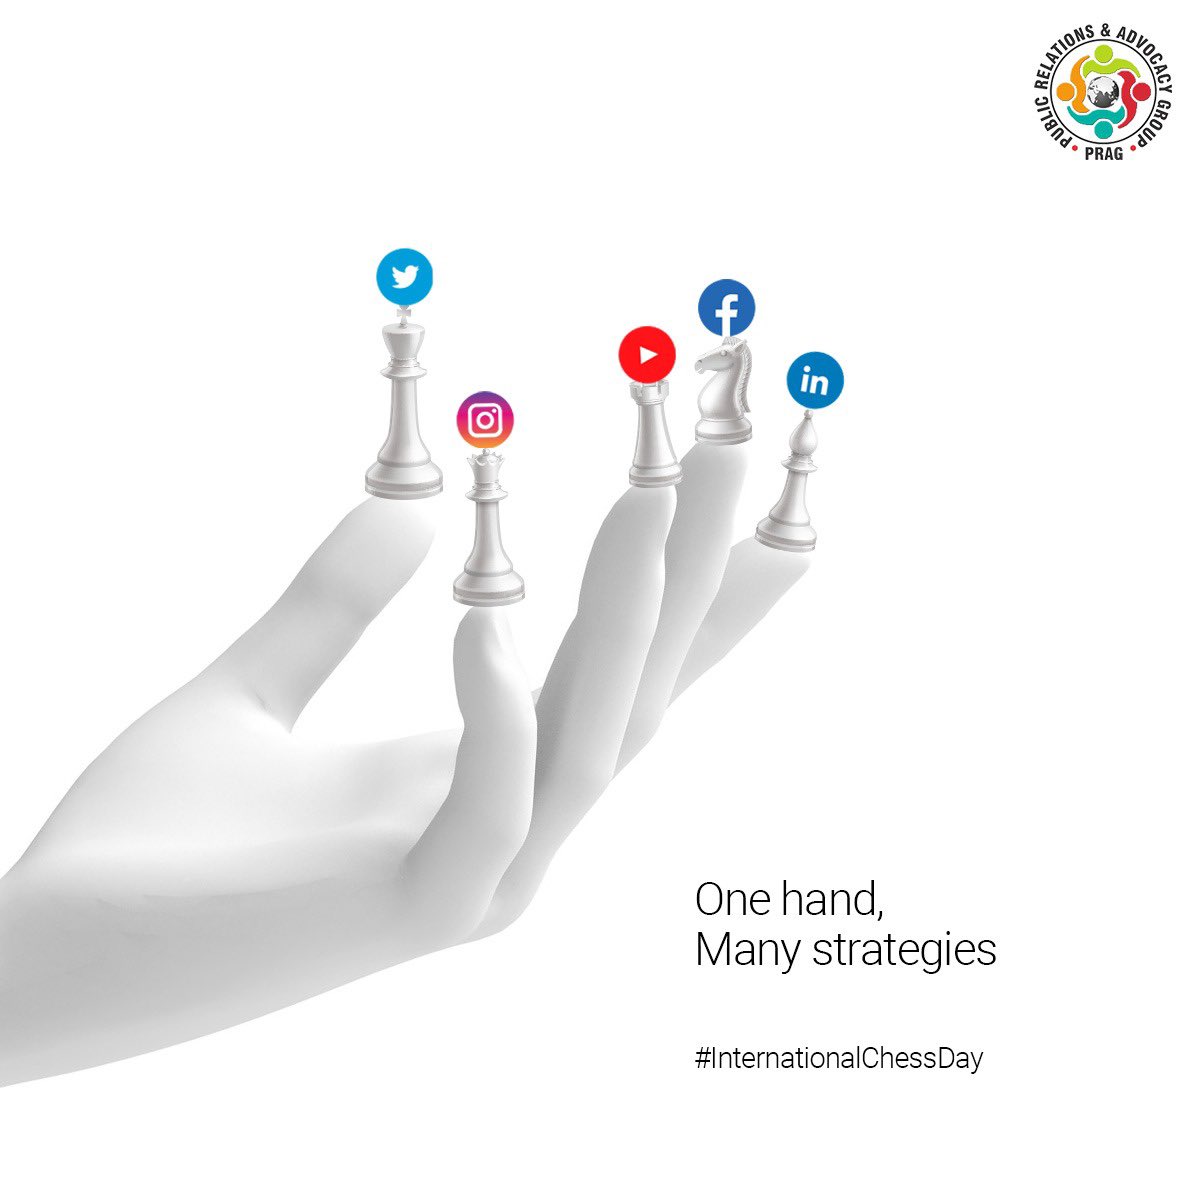 Plot, Plan & Post!

#CreatingPRAG #internationalchessday #chessday #socialmediastrategy #creativeagency